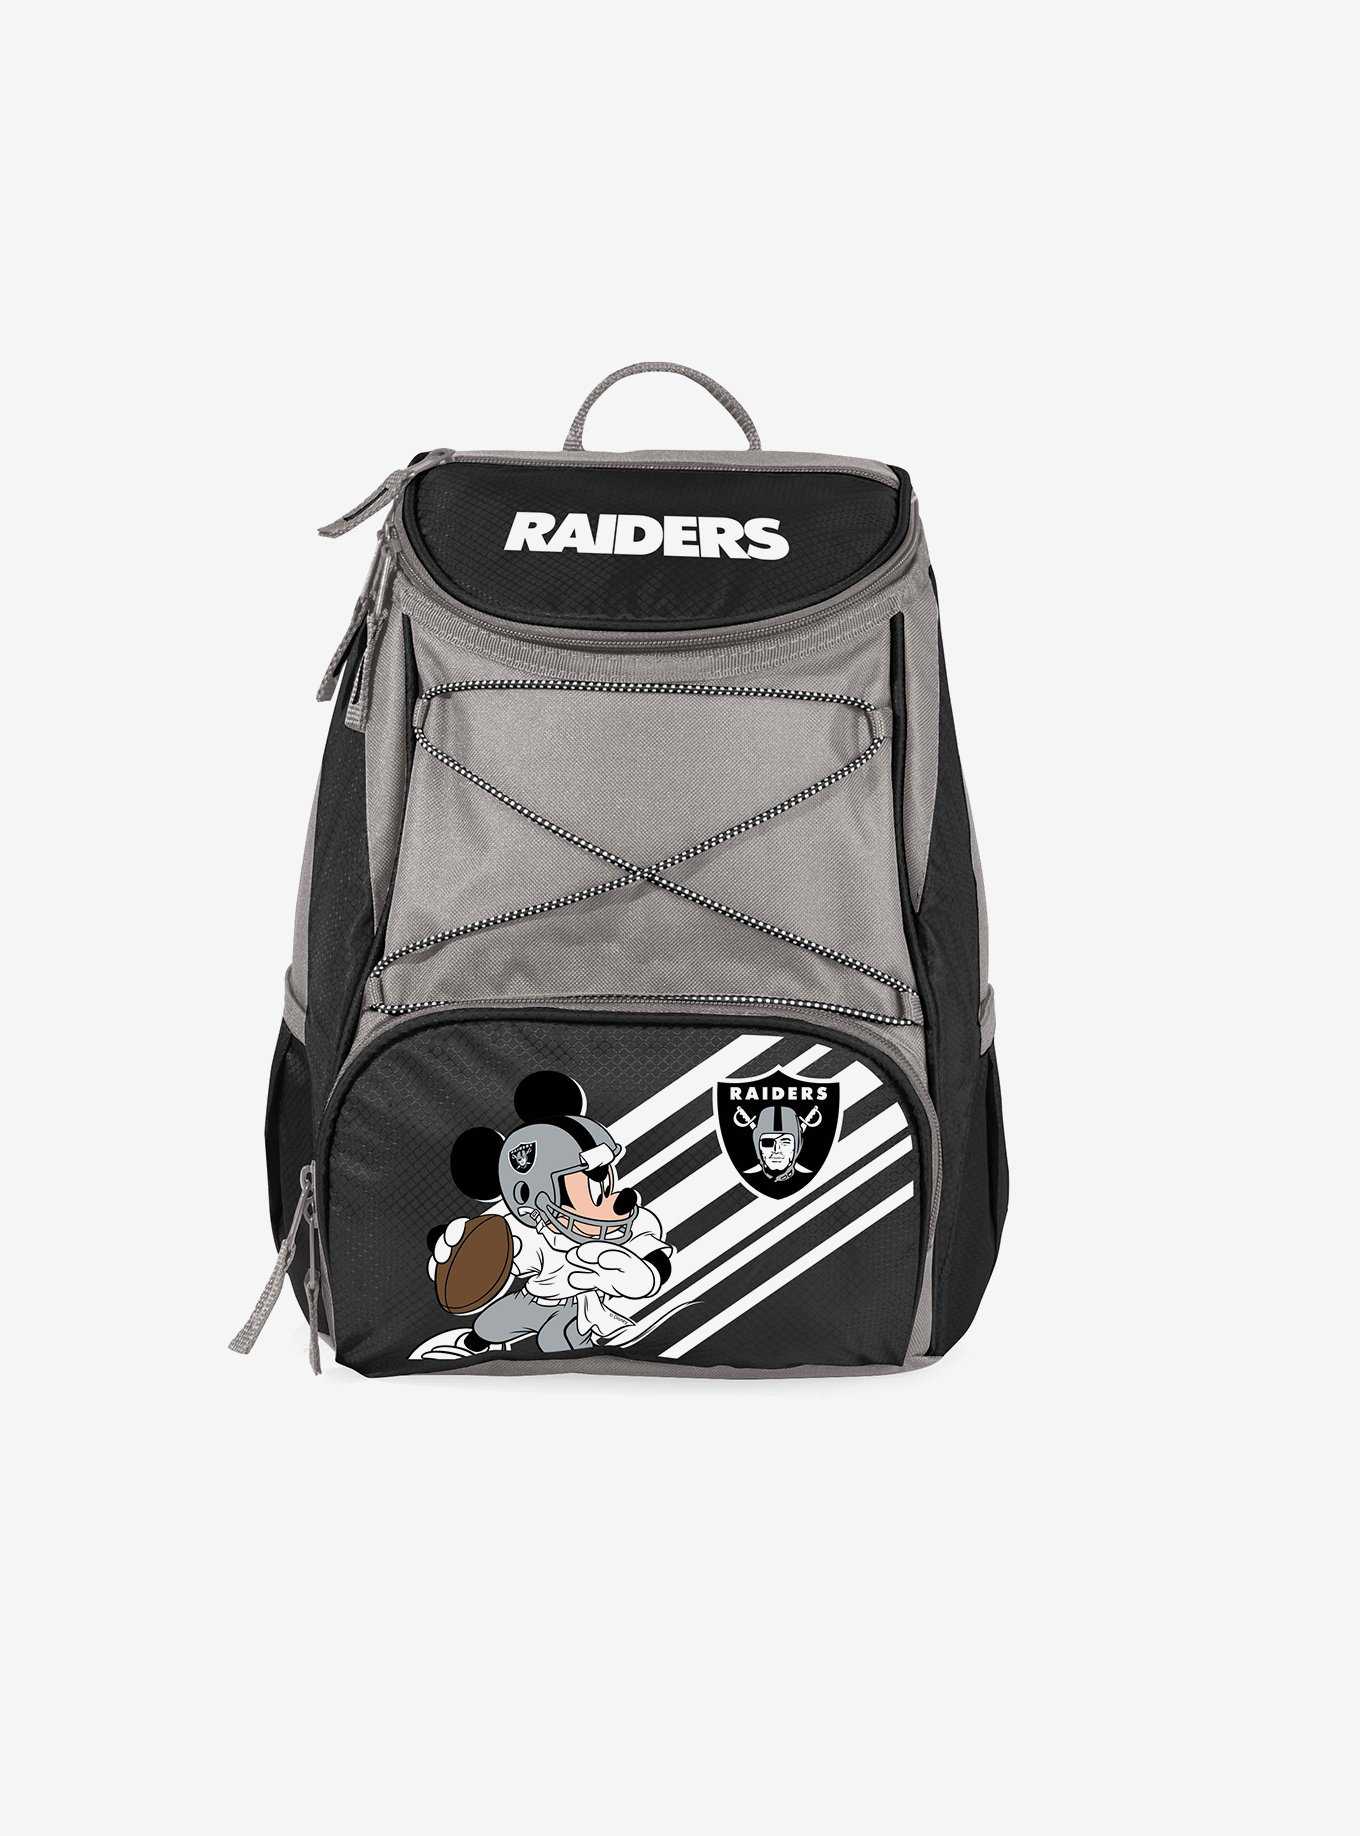 Disney Mickey Mouse NFL Las Vegas Raiders Cooler Backpack, , hi-res